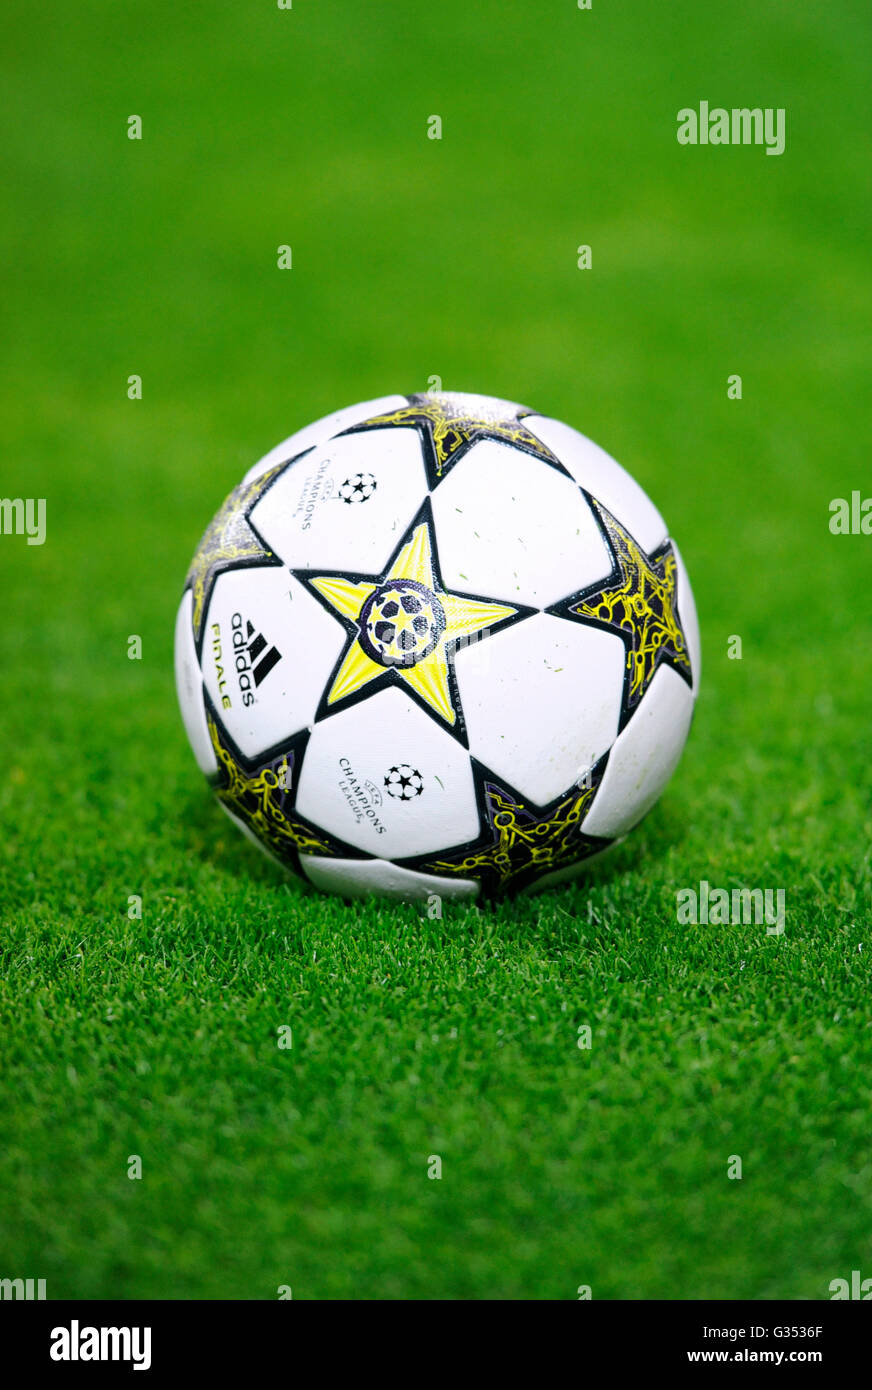 adidas 2015 uefa champions league glider football